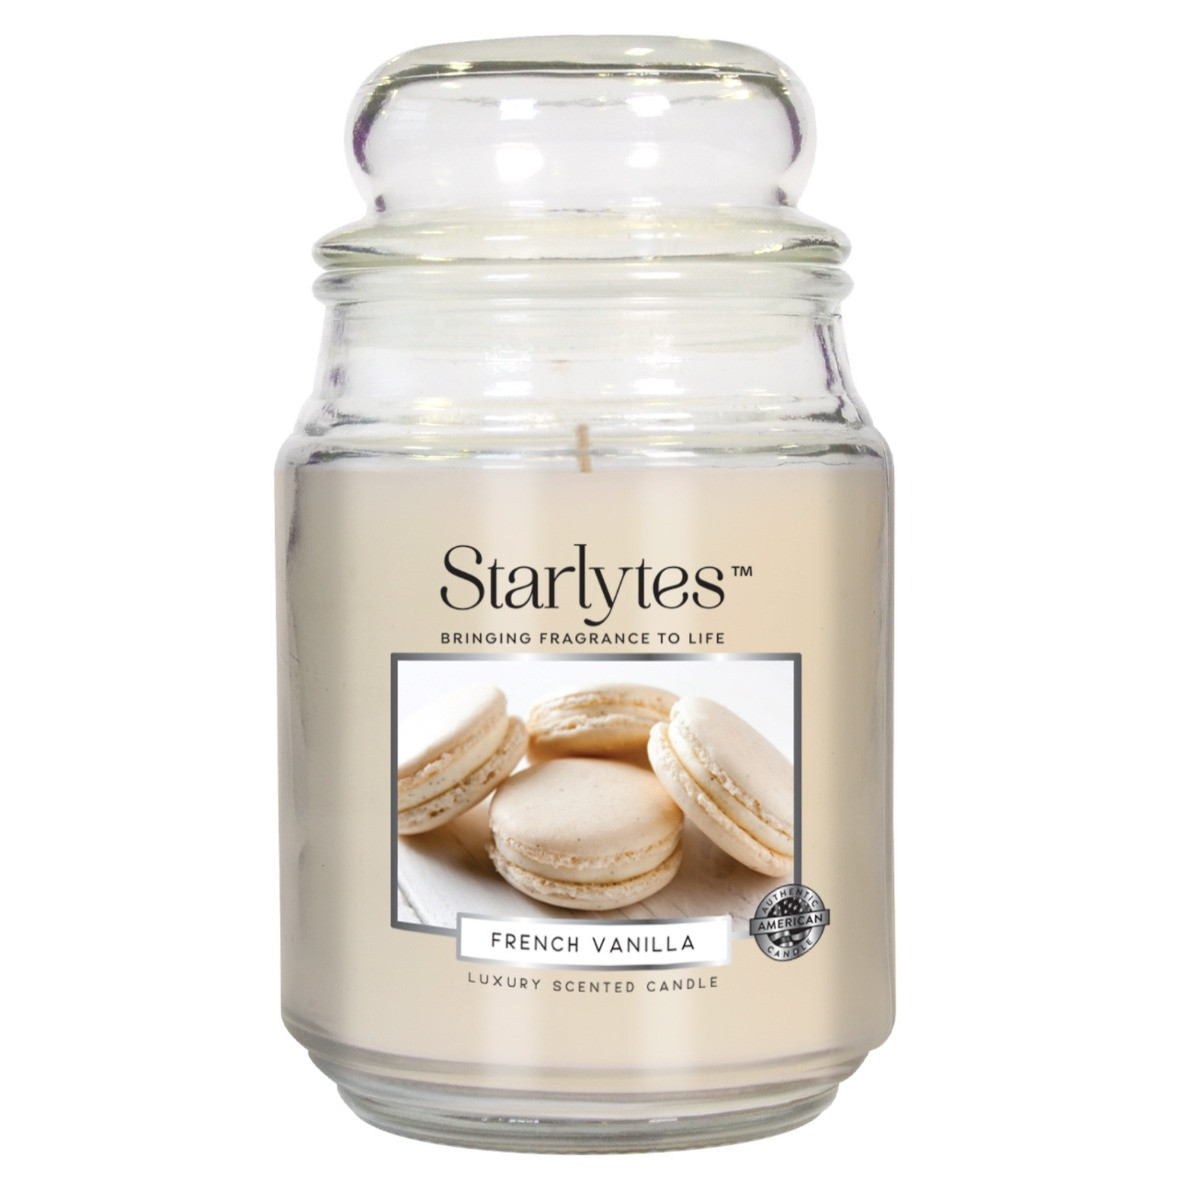 Starlytes 18oz Jar Candle - French Vanilla>